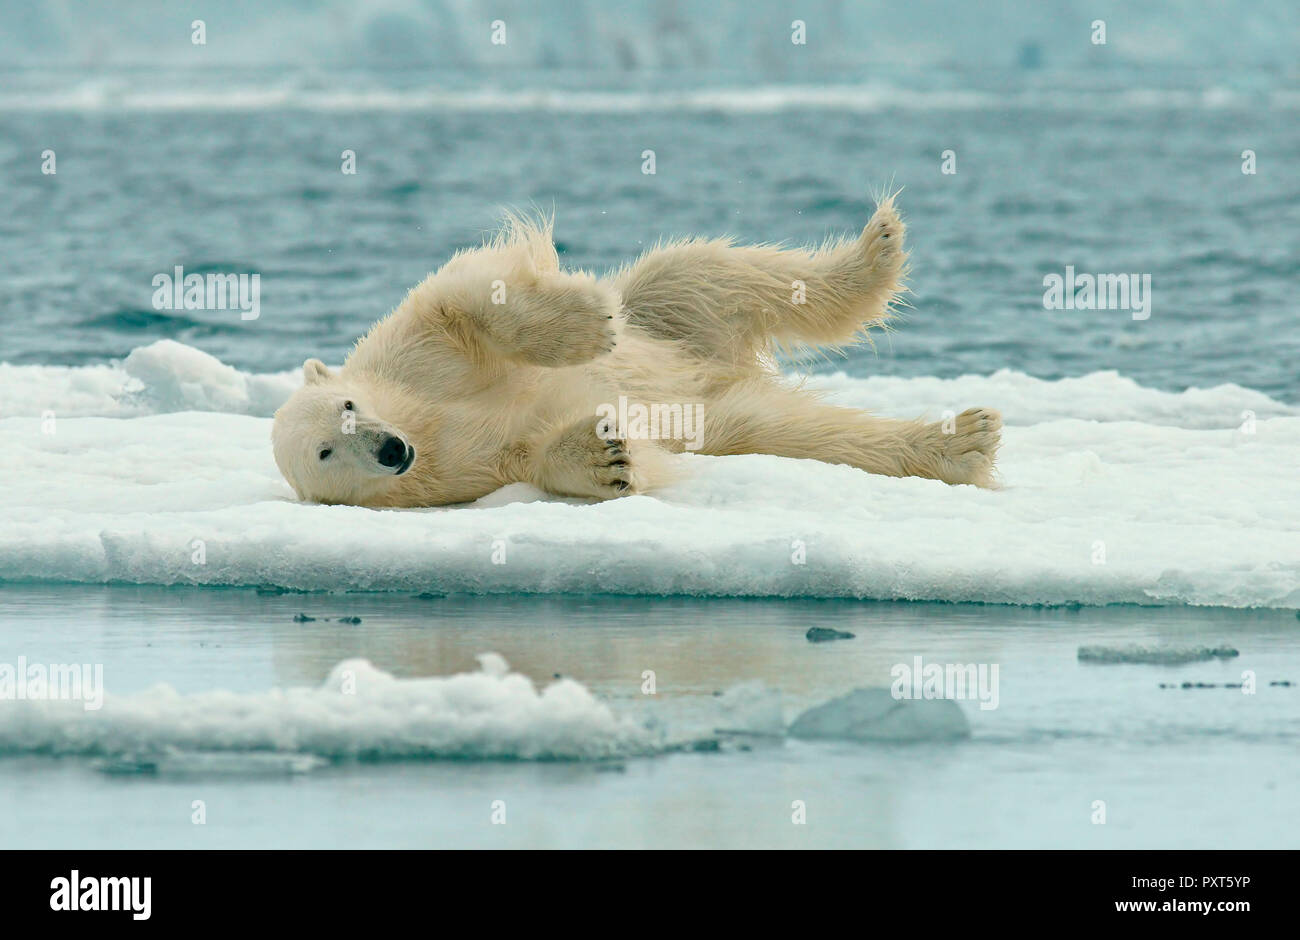 Polar bear (Ursus maritimus) rolling in the snow on ice floe, Svalbard, Norwegian Arctic, Norway Stock Photo